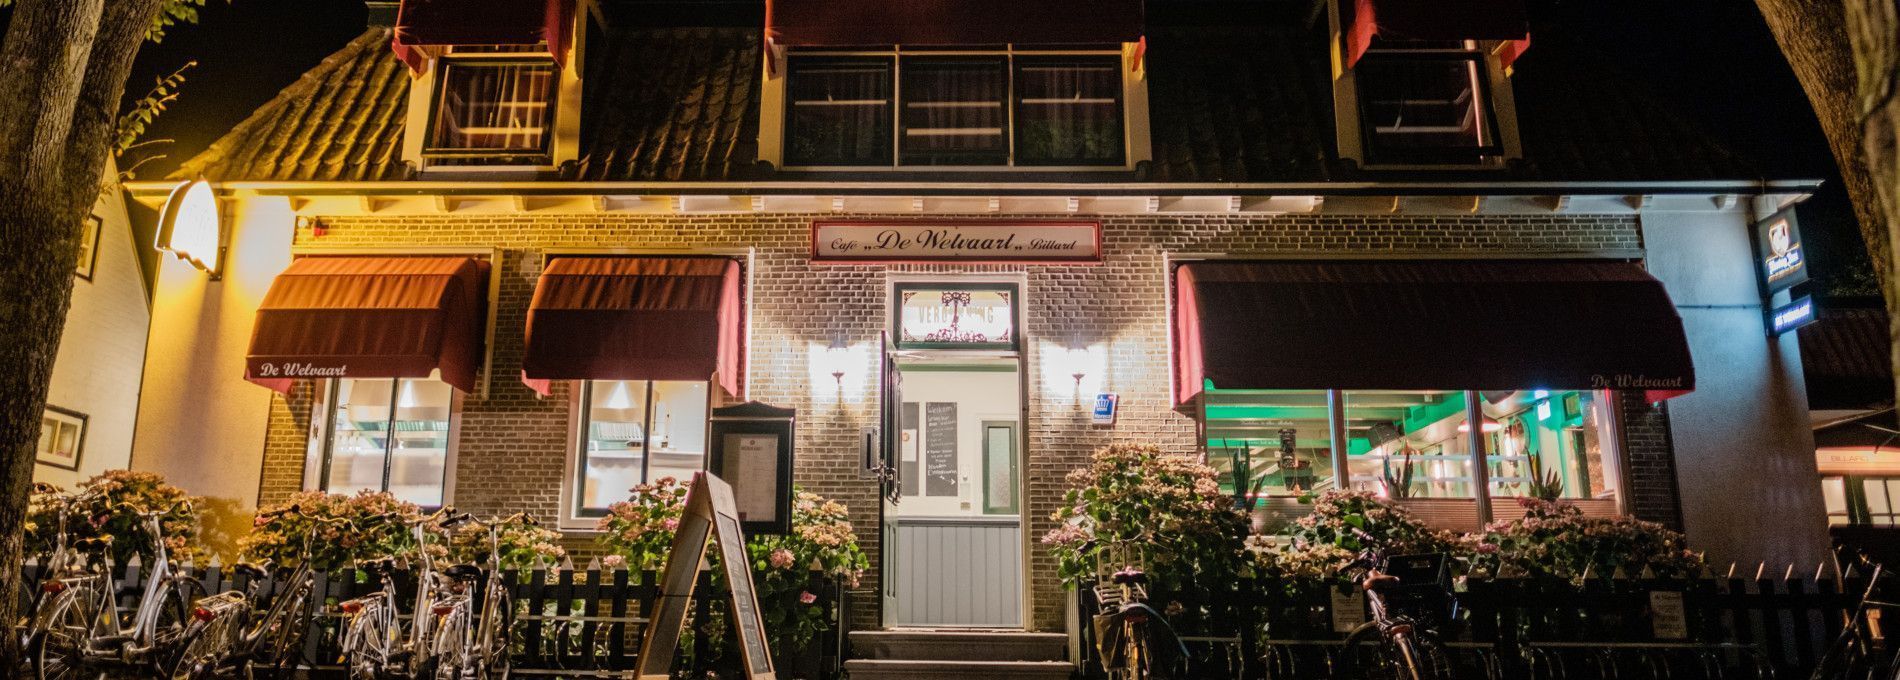 Restaurant De Welvaart - Tourist Information “VVV” Ameland